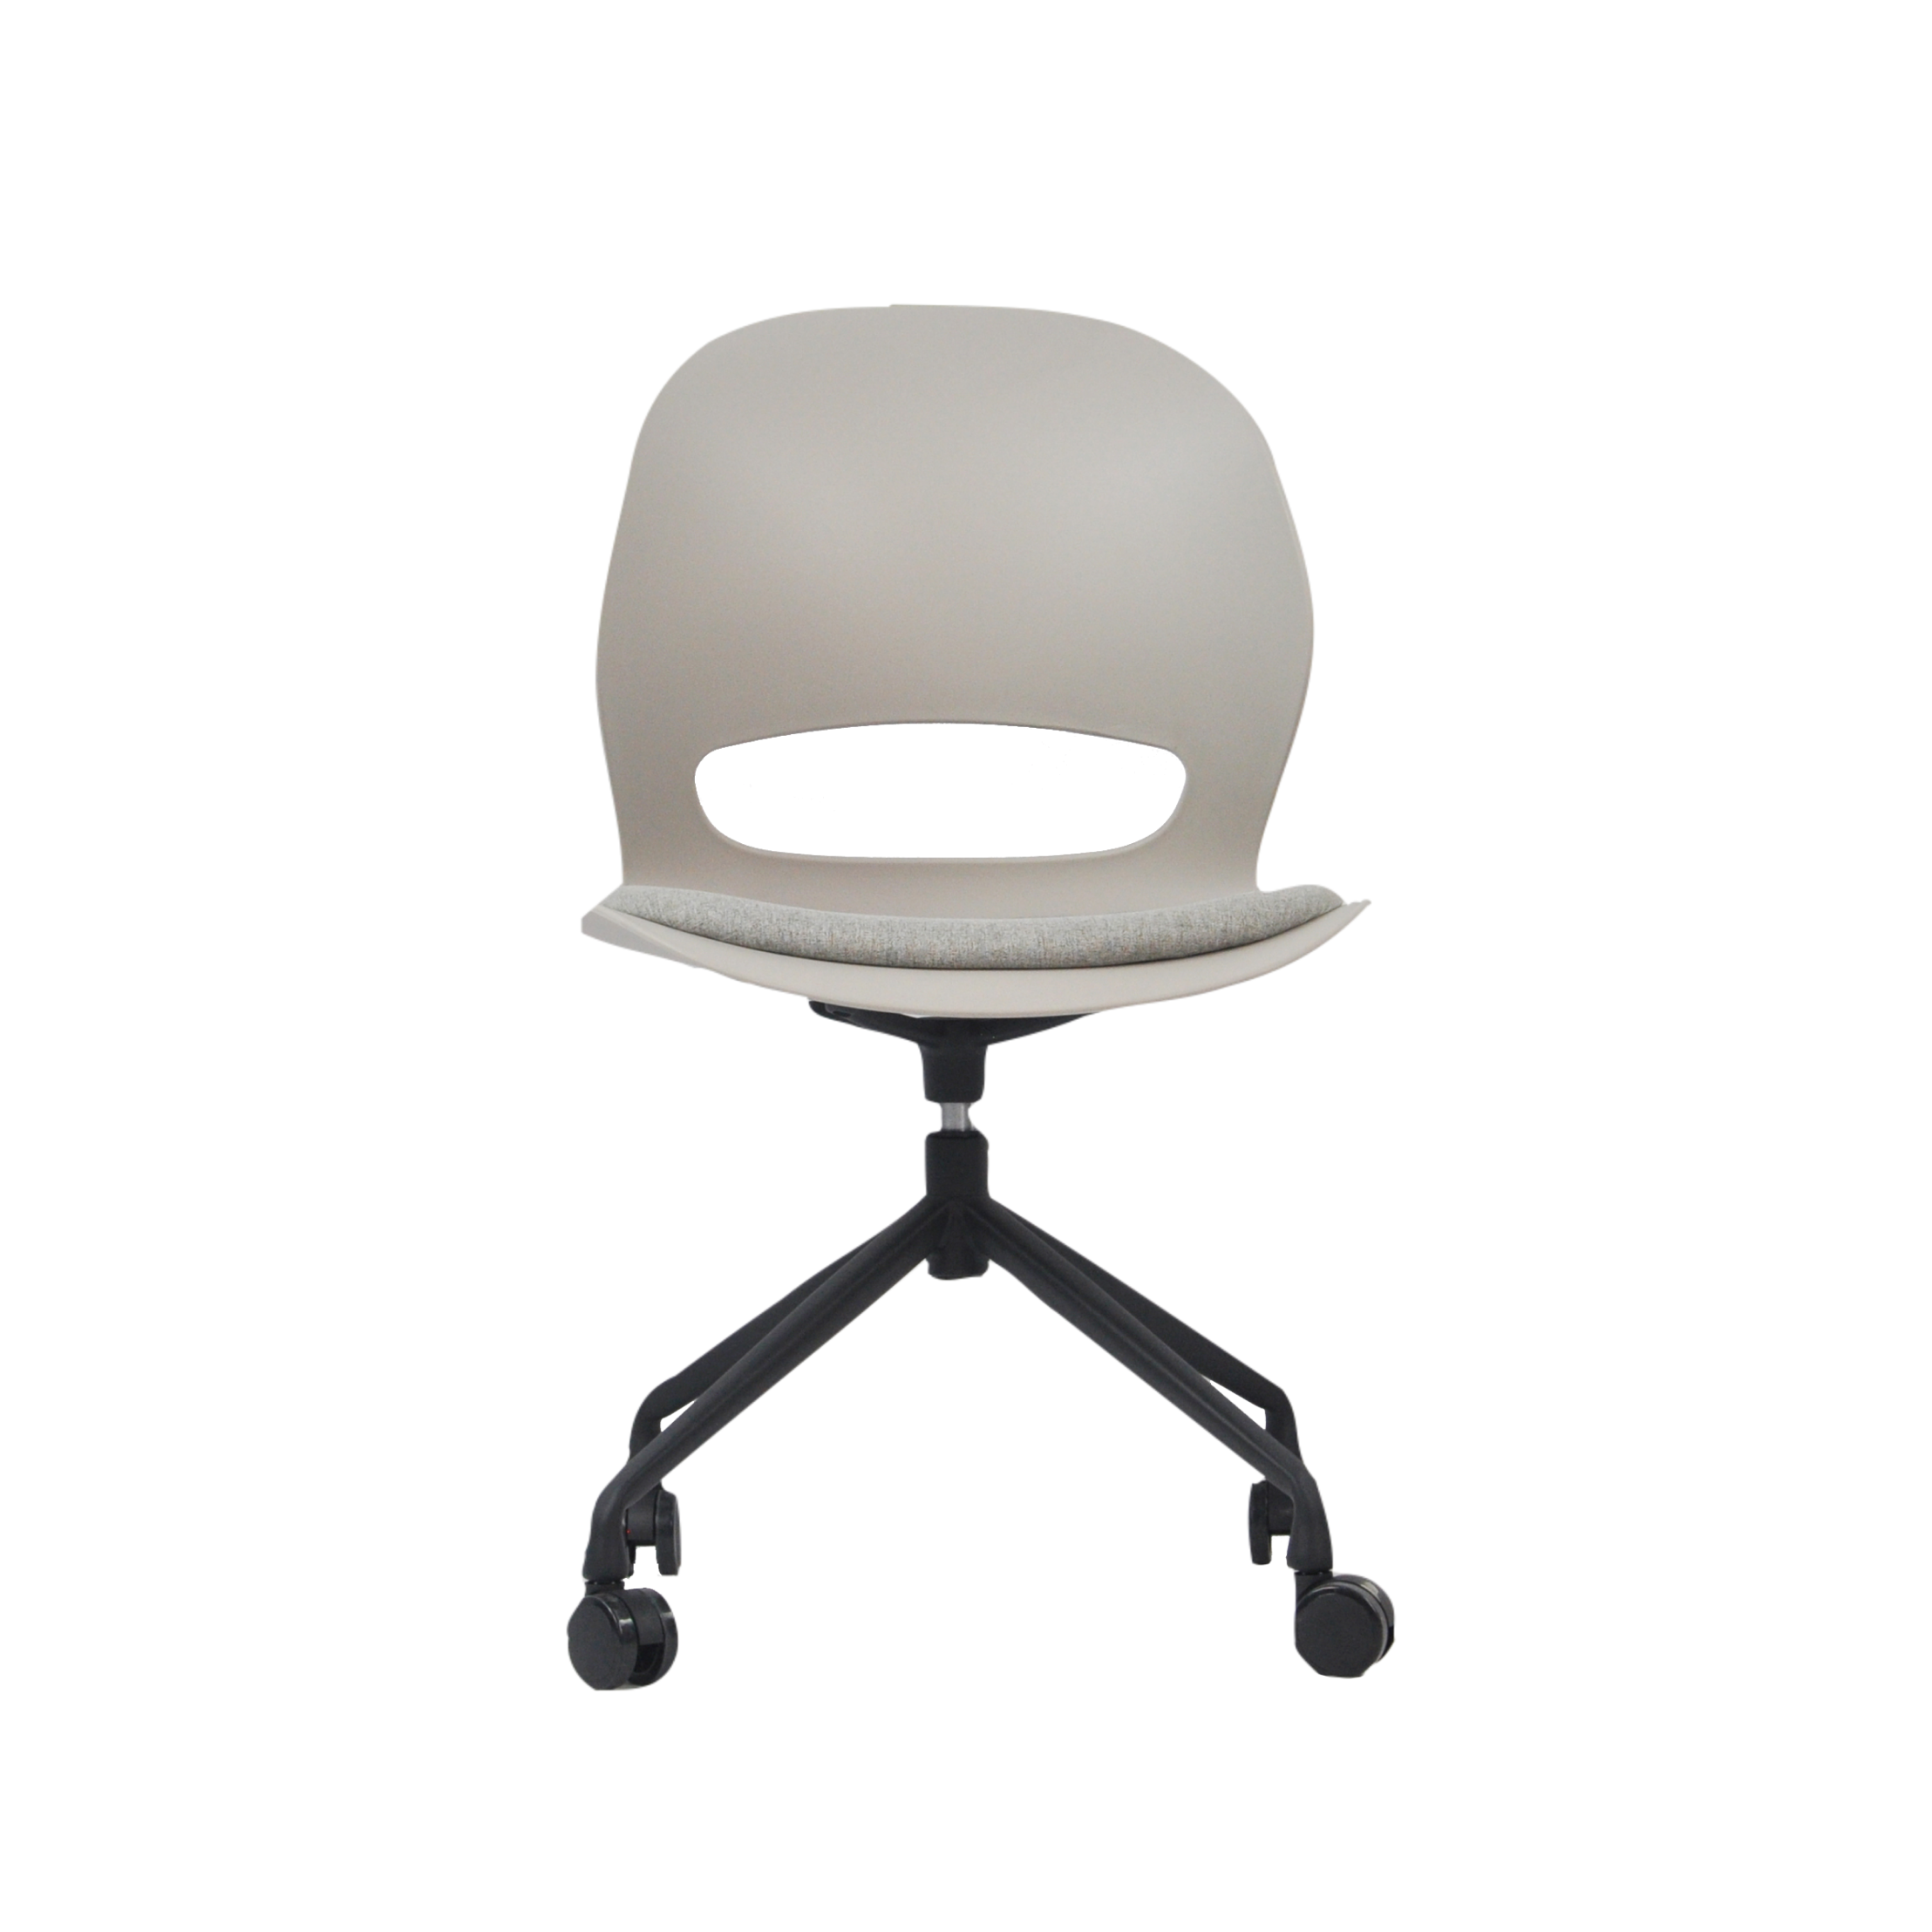 Office chair | Ergonomic chair | VIS Chair-beige grey by Navoergonomic